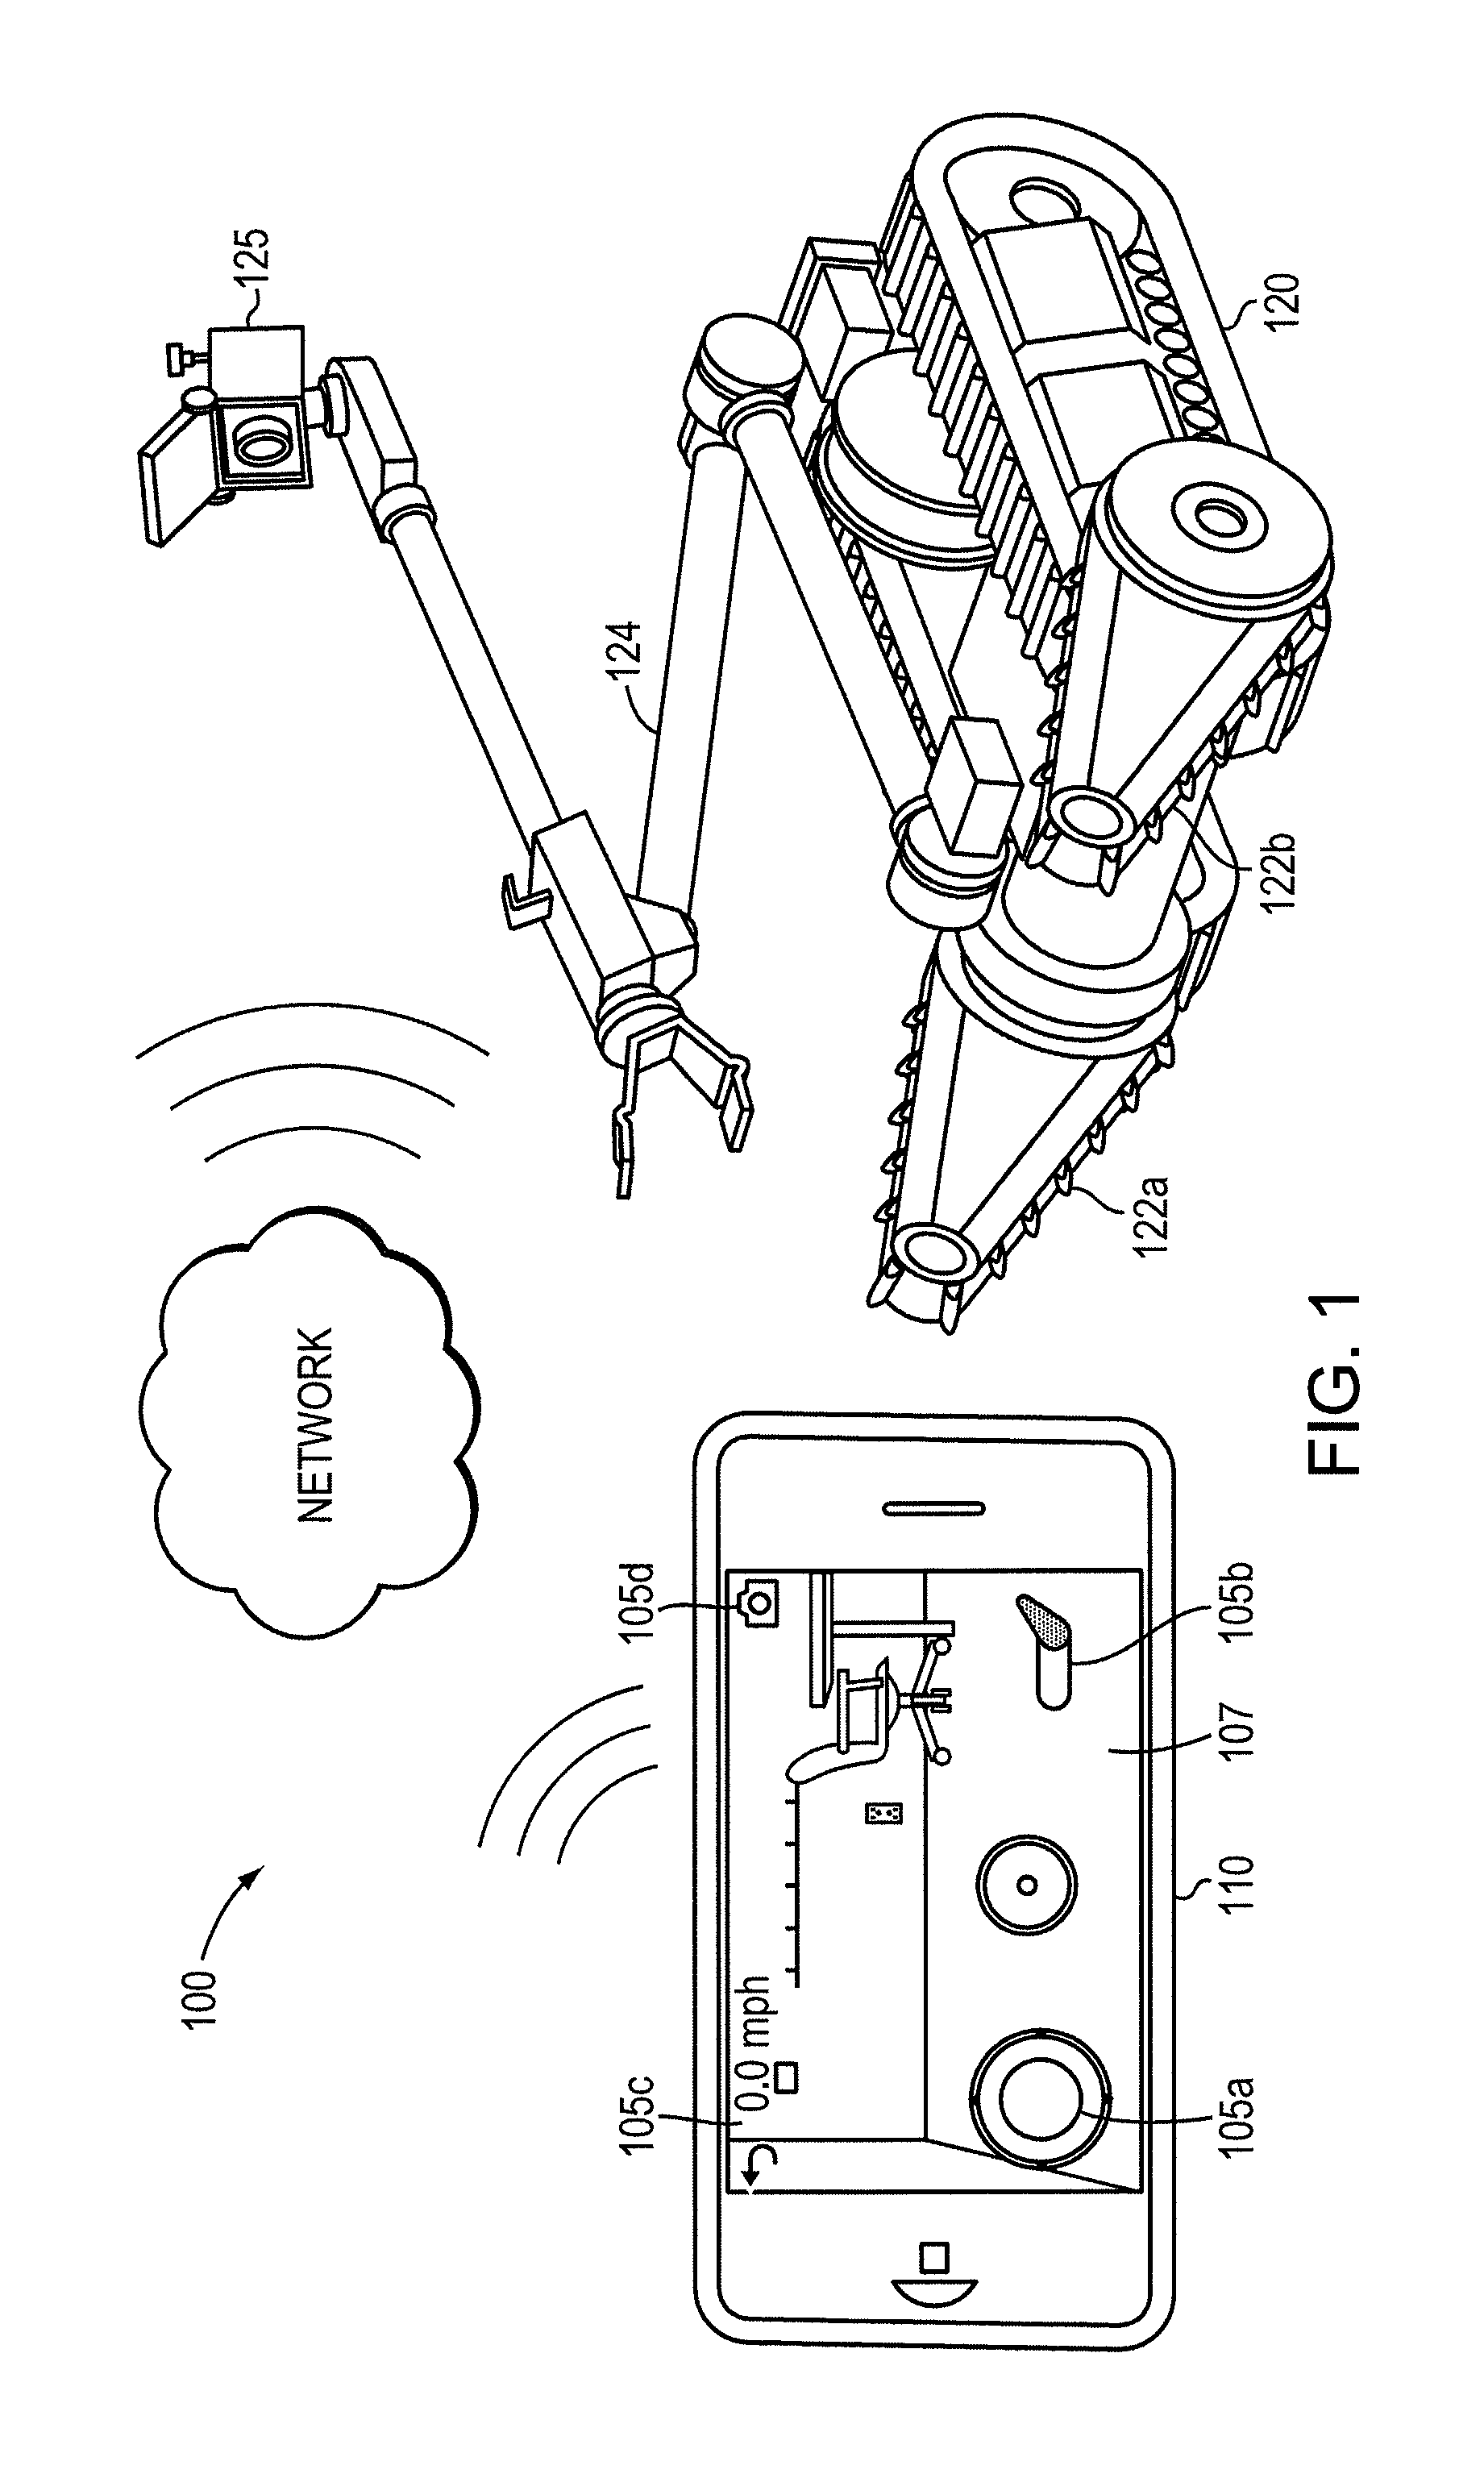 Teleoperation of unmanned ground vehicle